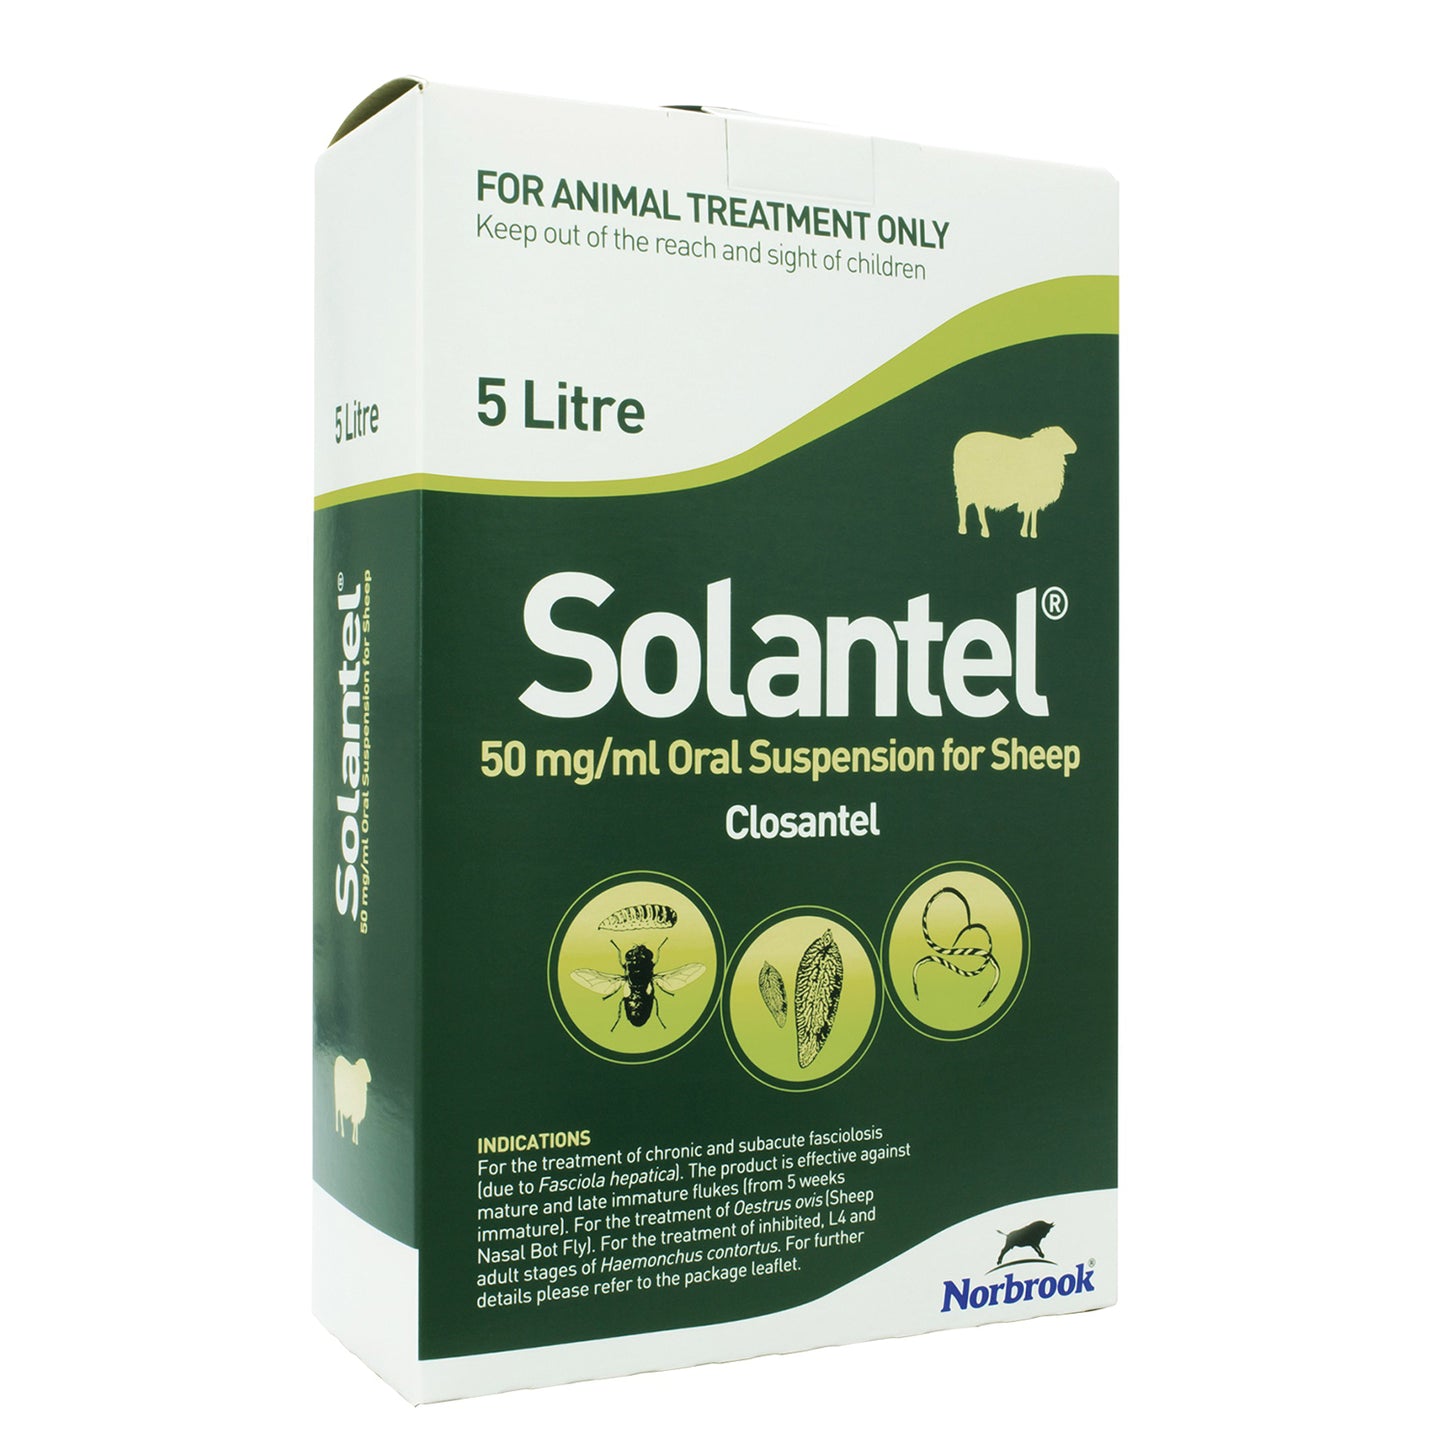 Solantel 50 mg/ml Oral Suspension for Sheep